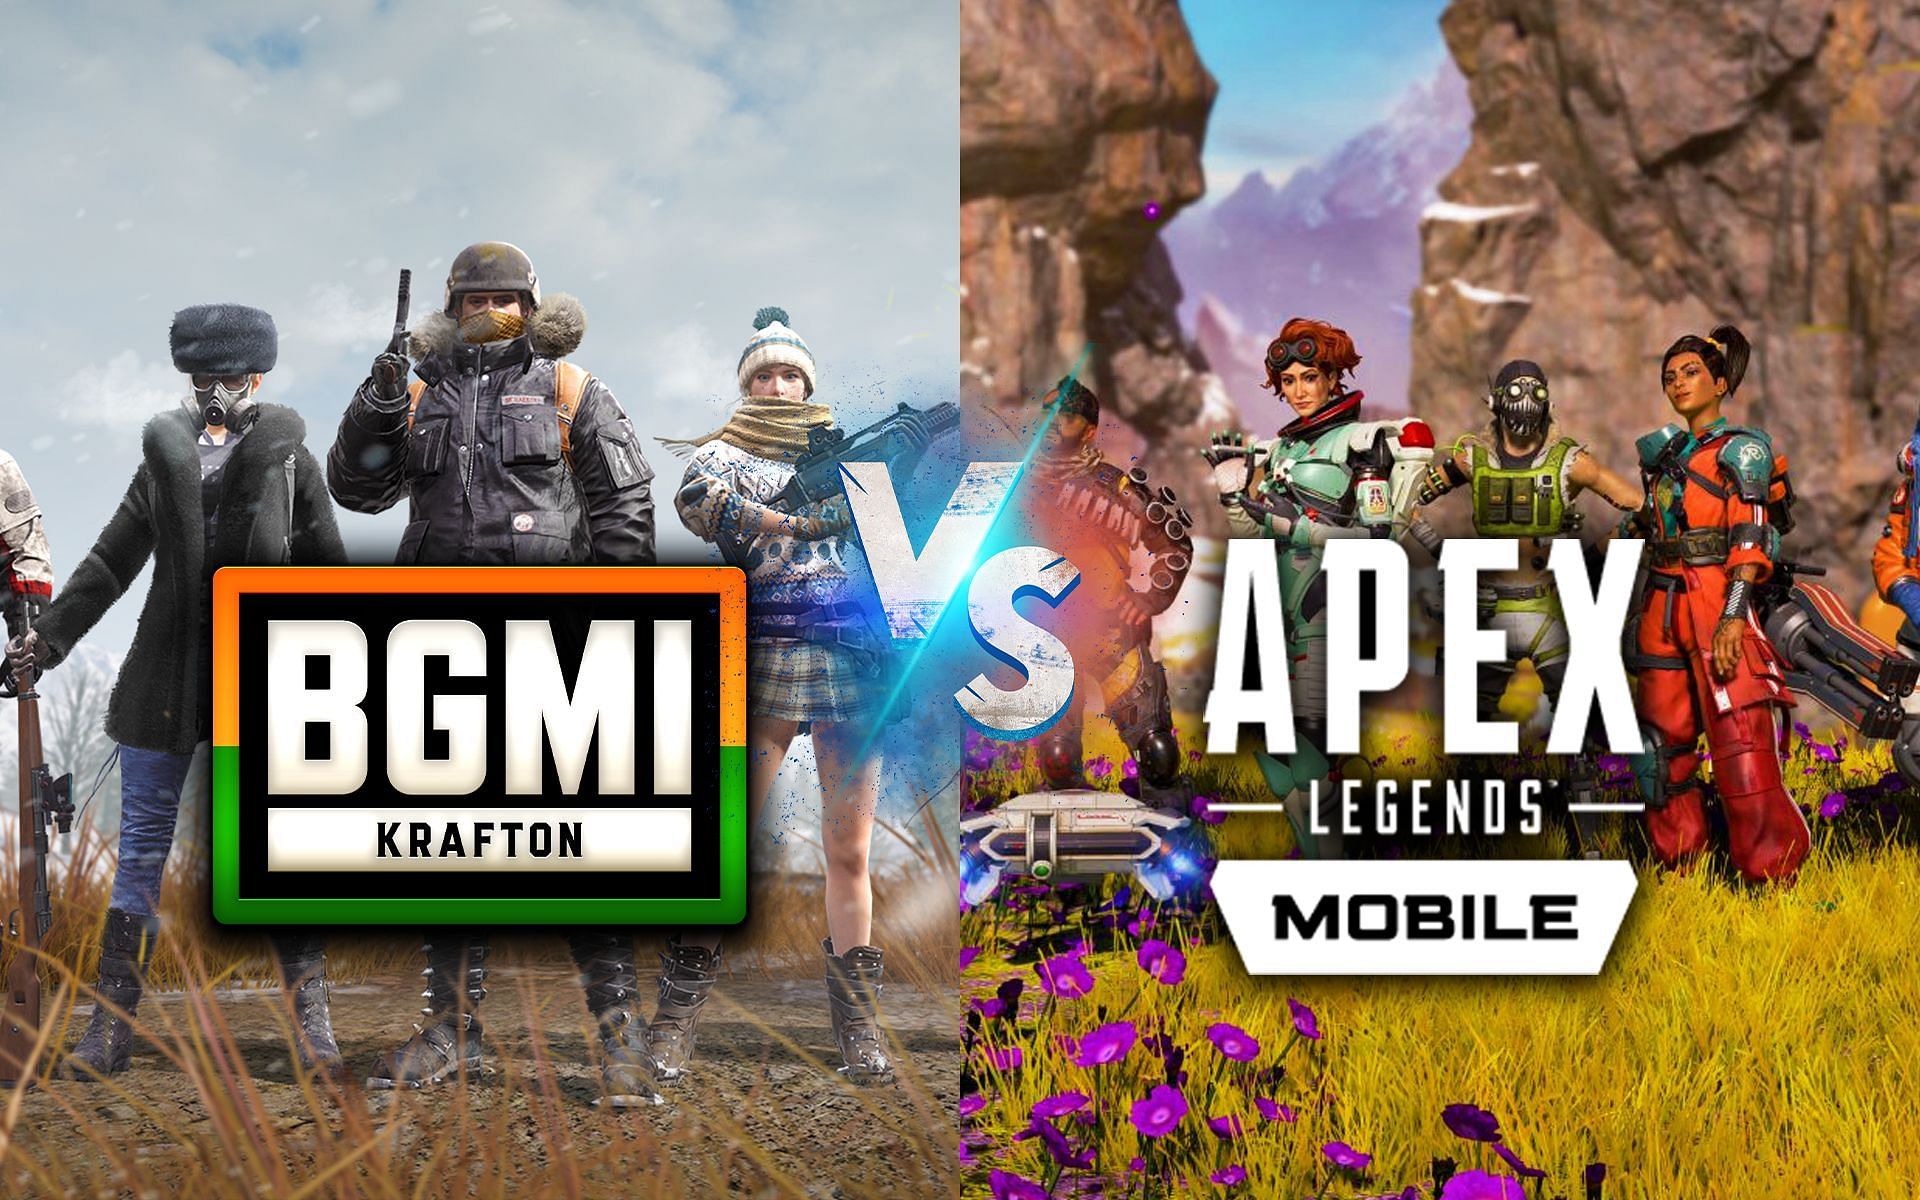 BGMI vs Apex Legends is a heated topic of discussion (Image via Sportskeeda)